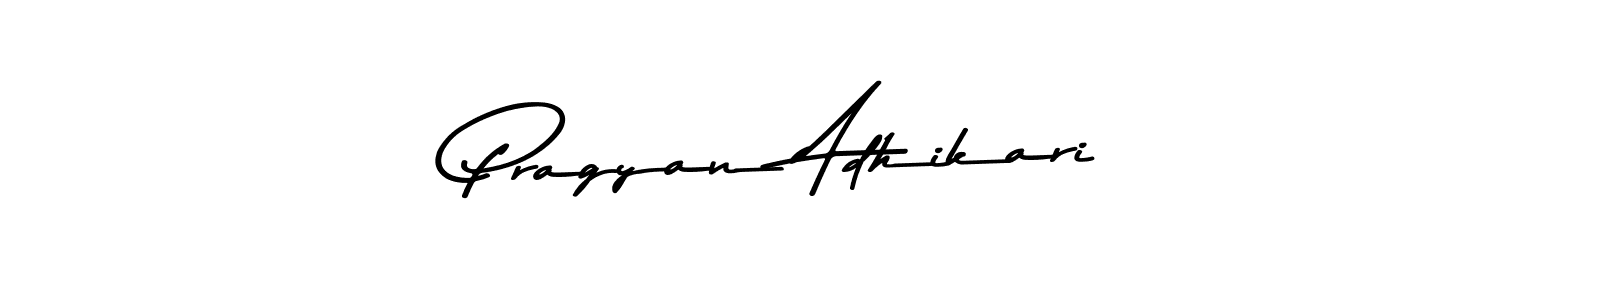 How to Draw Pragyan Adhikari signature style? Asem Kandis PERSONAL USE is a latest design signature styles for name Pragyan Adhikari. Pragyan Adhikari signature style 9 images and pictures png